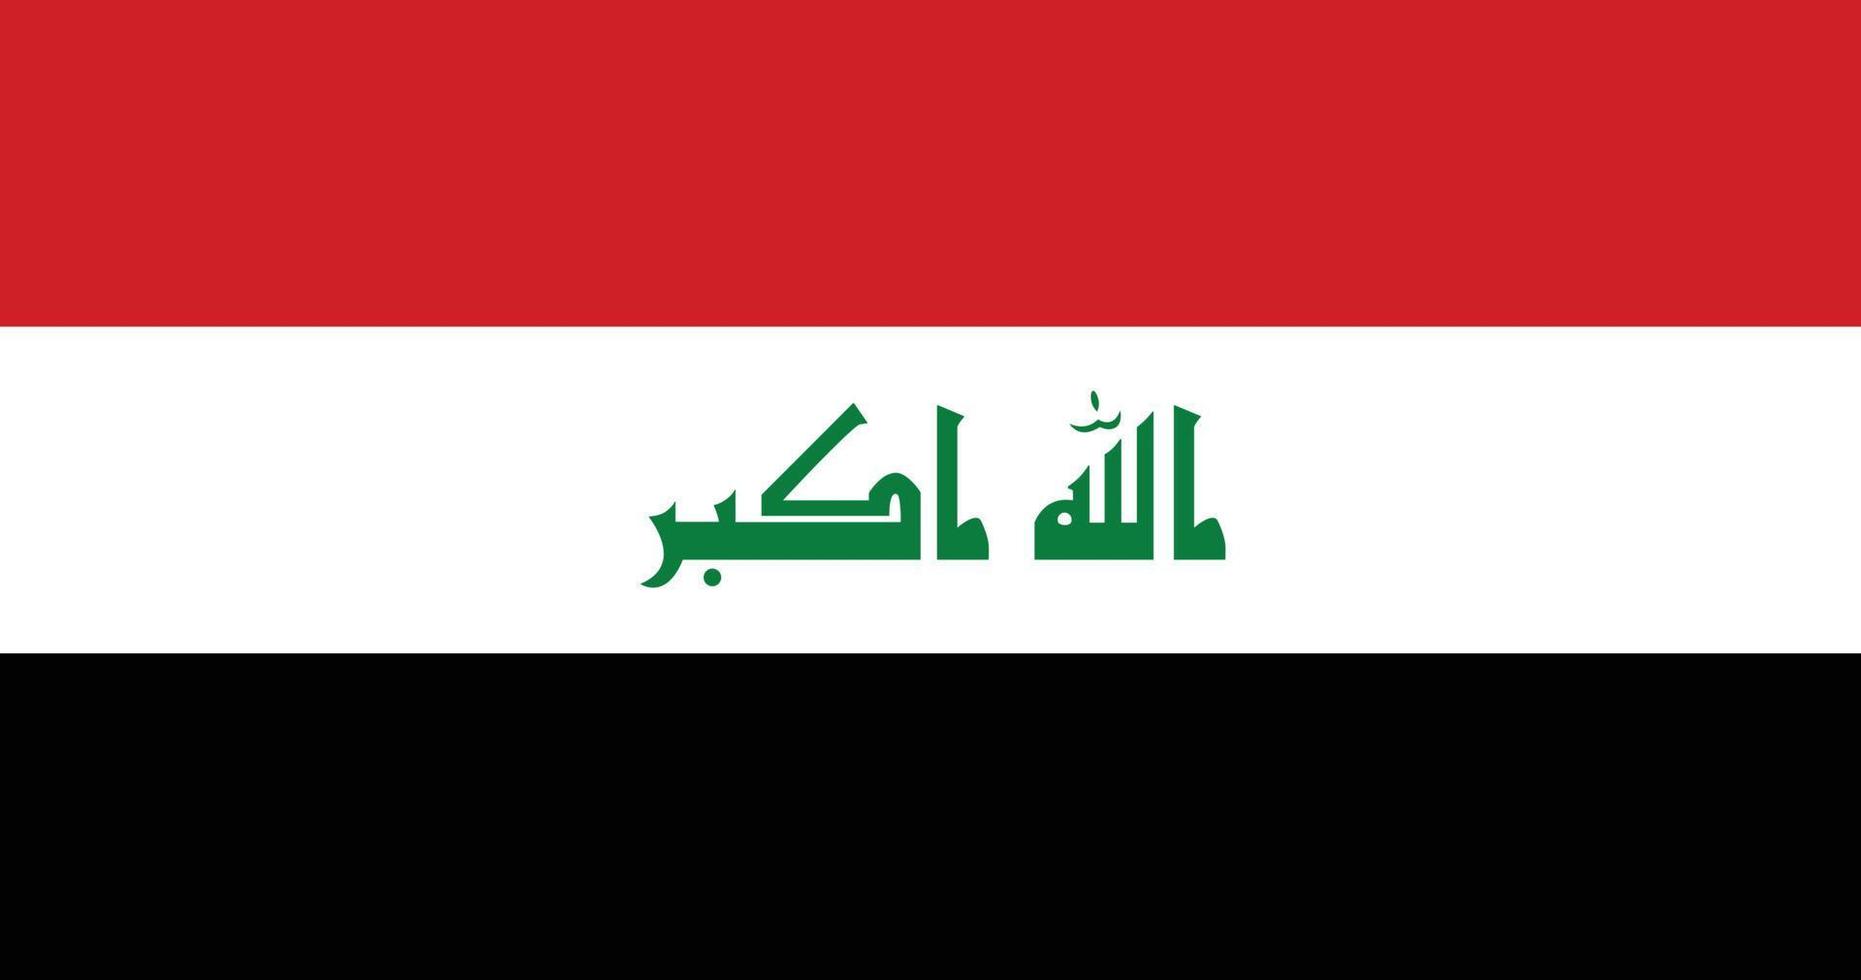 Iraqi flag with original RGB color vector illustration design